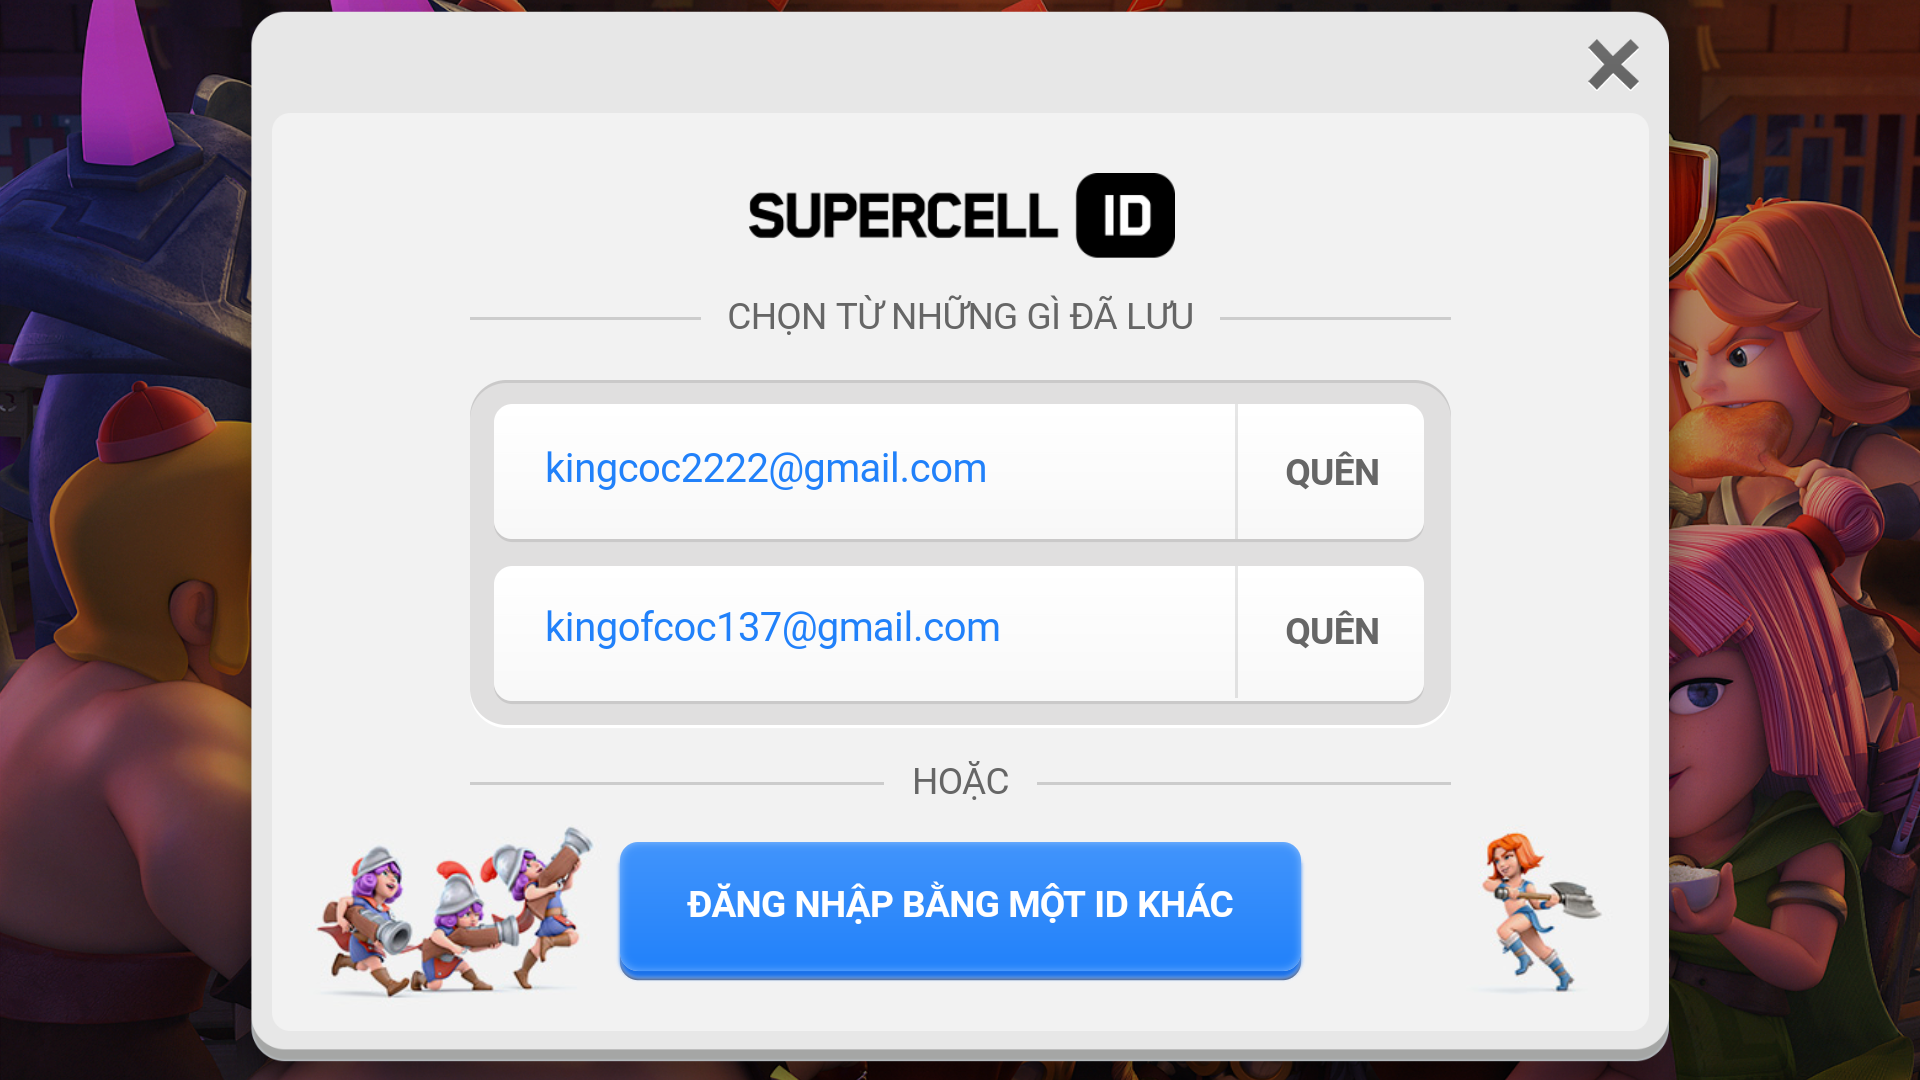 Почему не приходит код supercell id. Supercell ID код. Суперселл аккаунты. Номер Supercell. Игры Supercell ID.